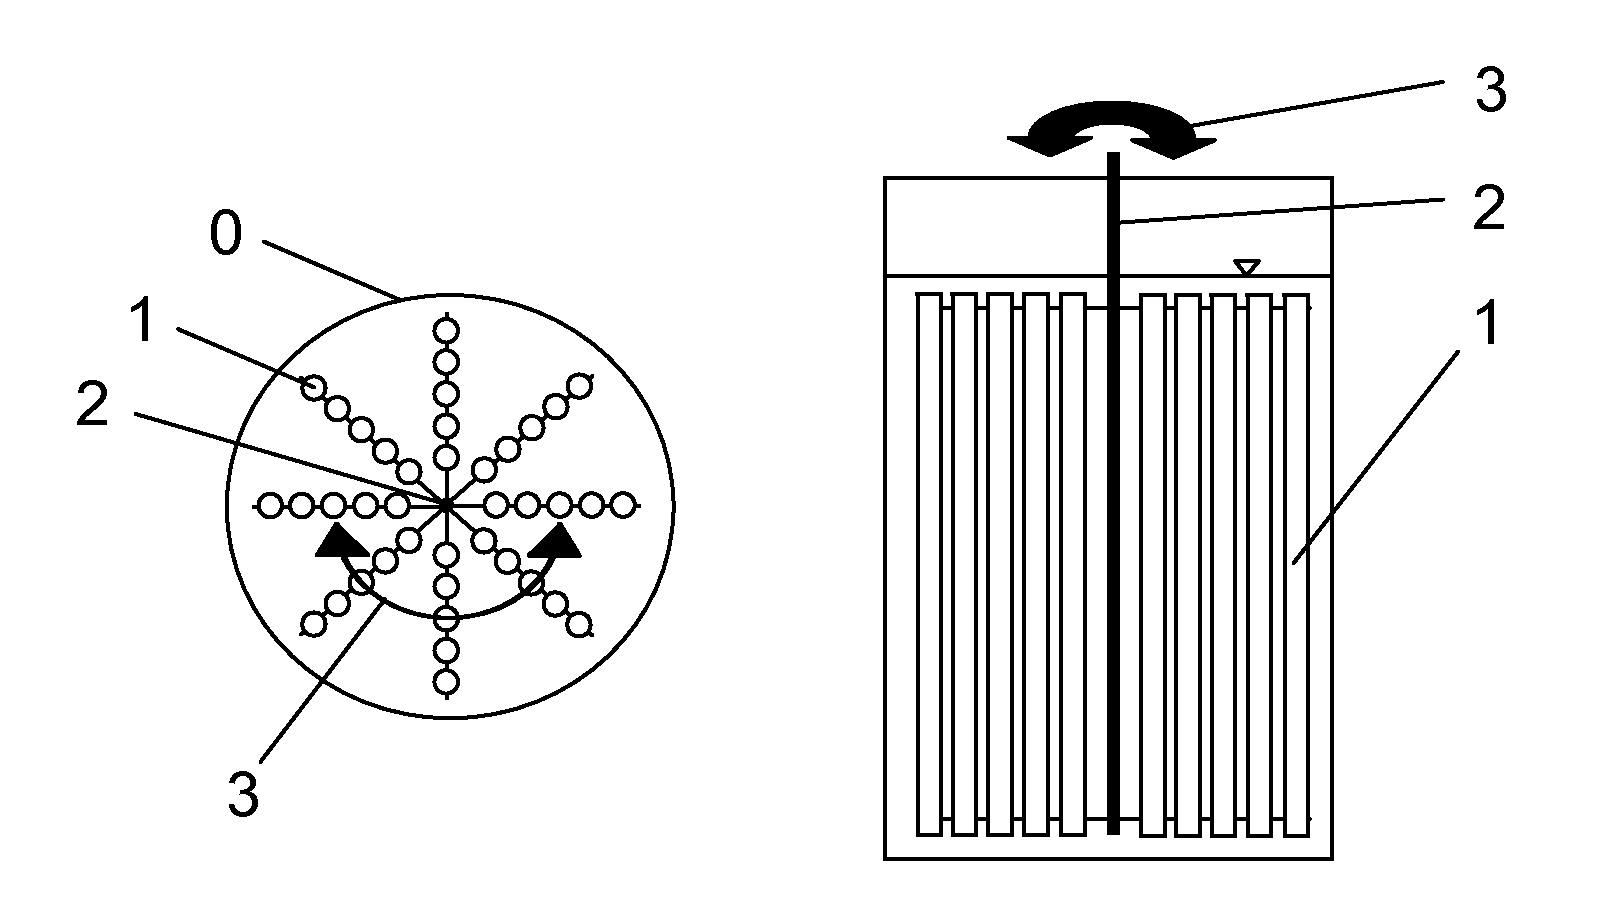 Photobioreactor comprising rotationally oscillating light sources